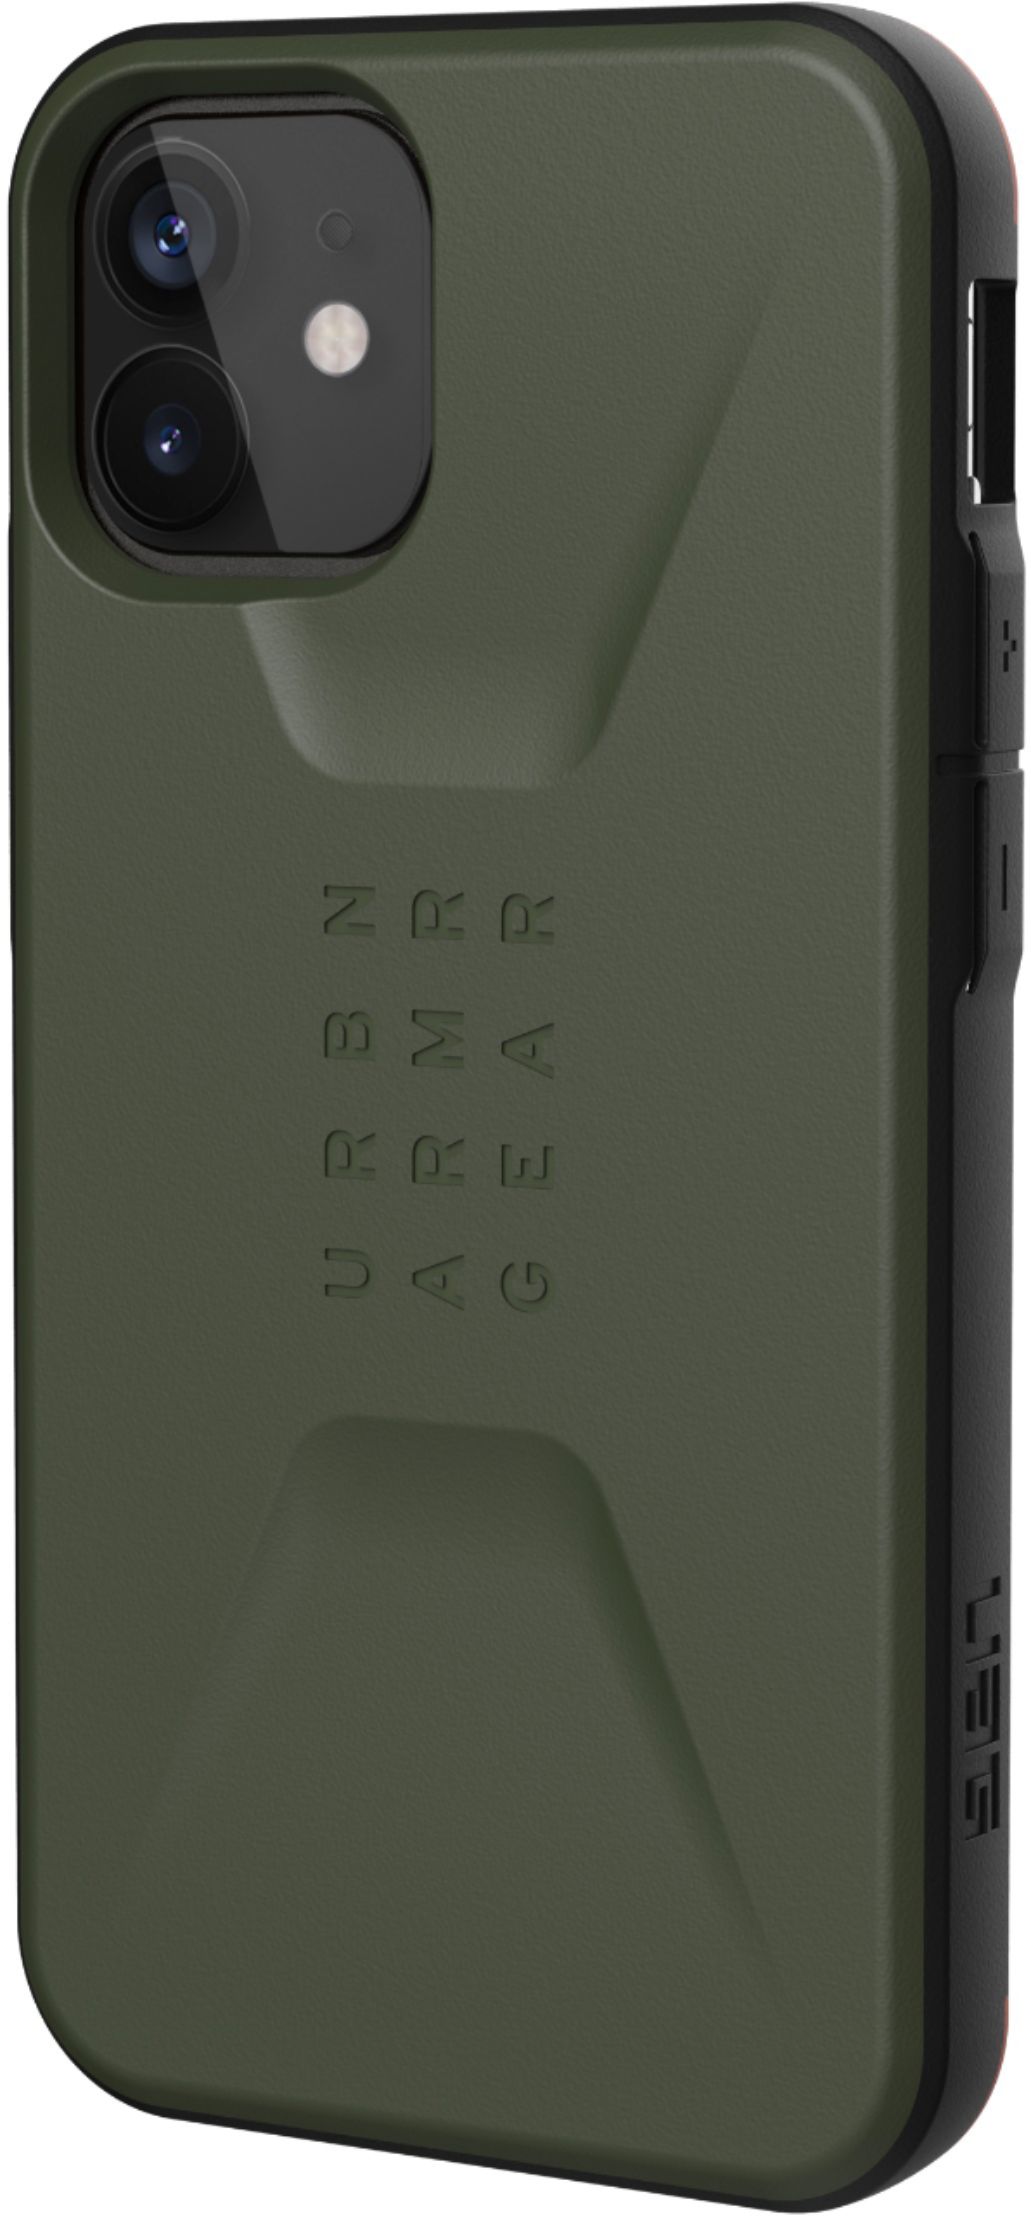 Angle View: UAG - Civilian Hard shell Case for Apple iPhone 12 Mini - Olive